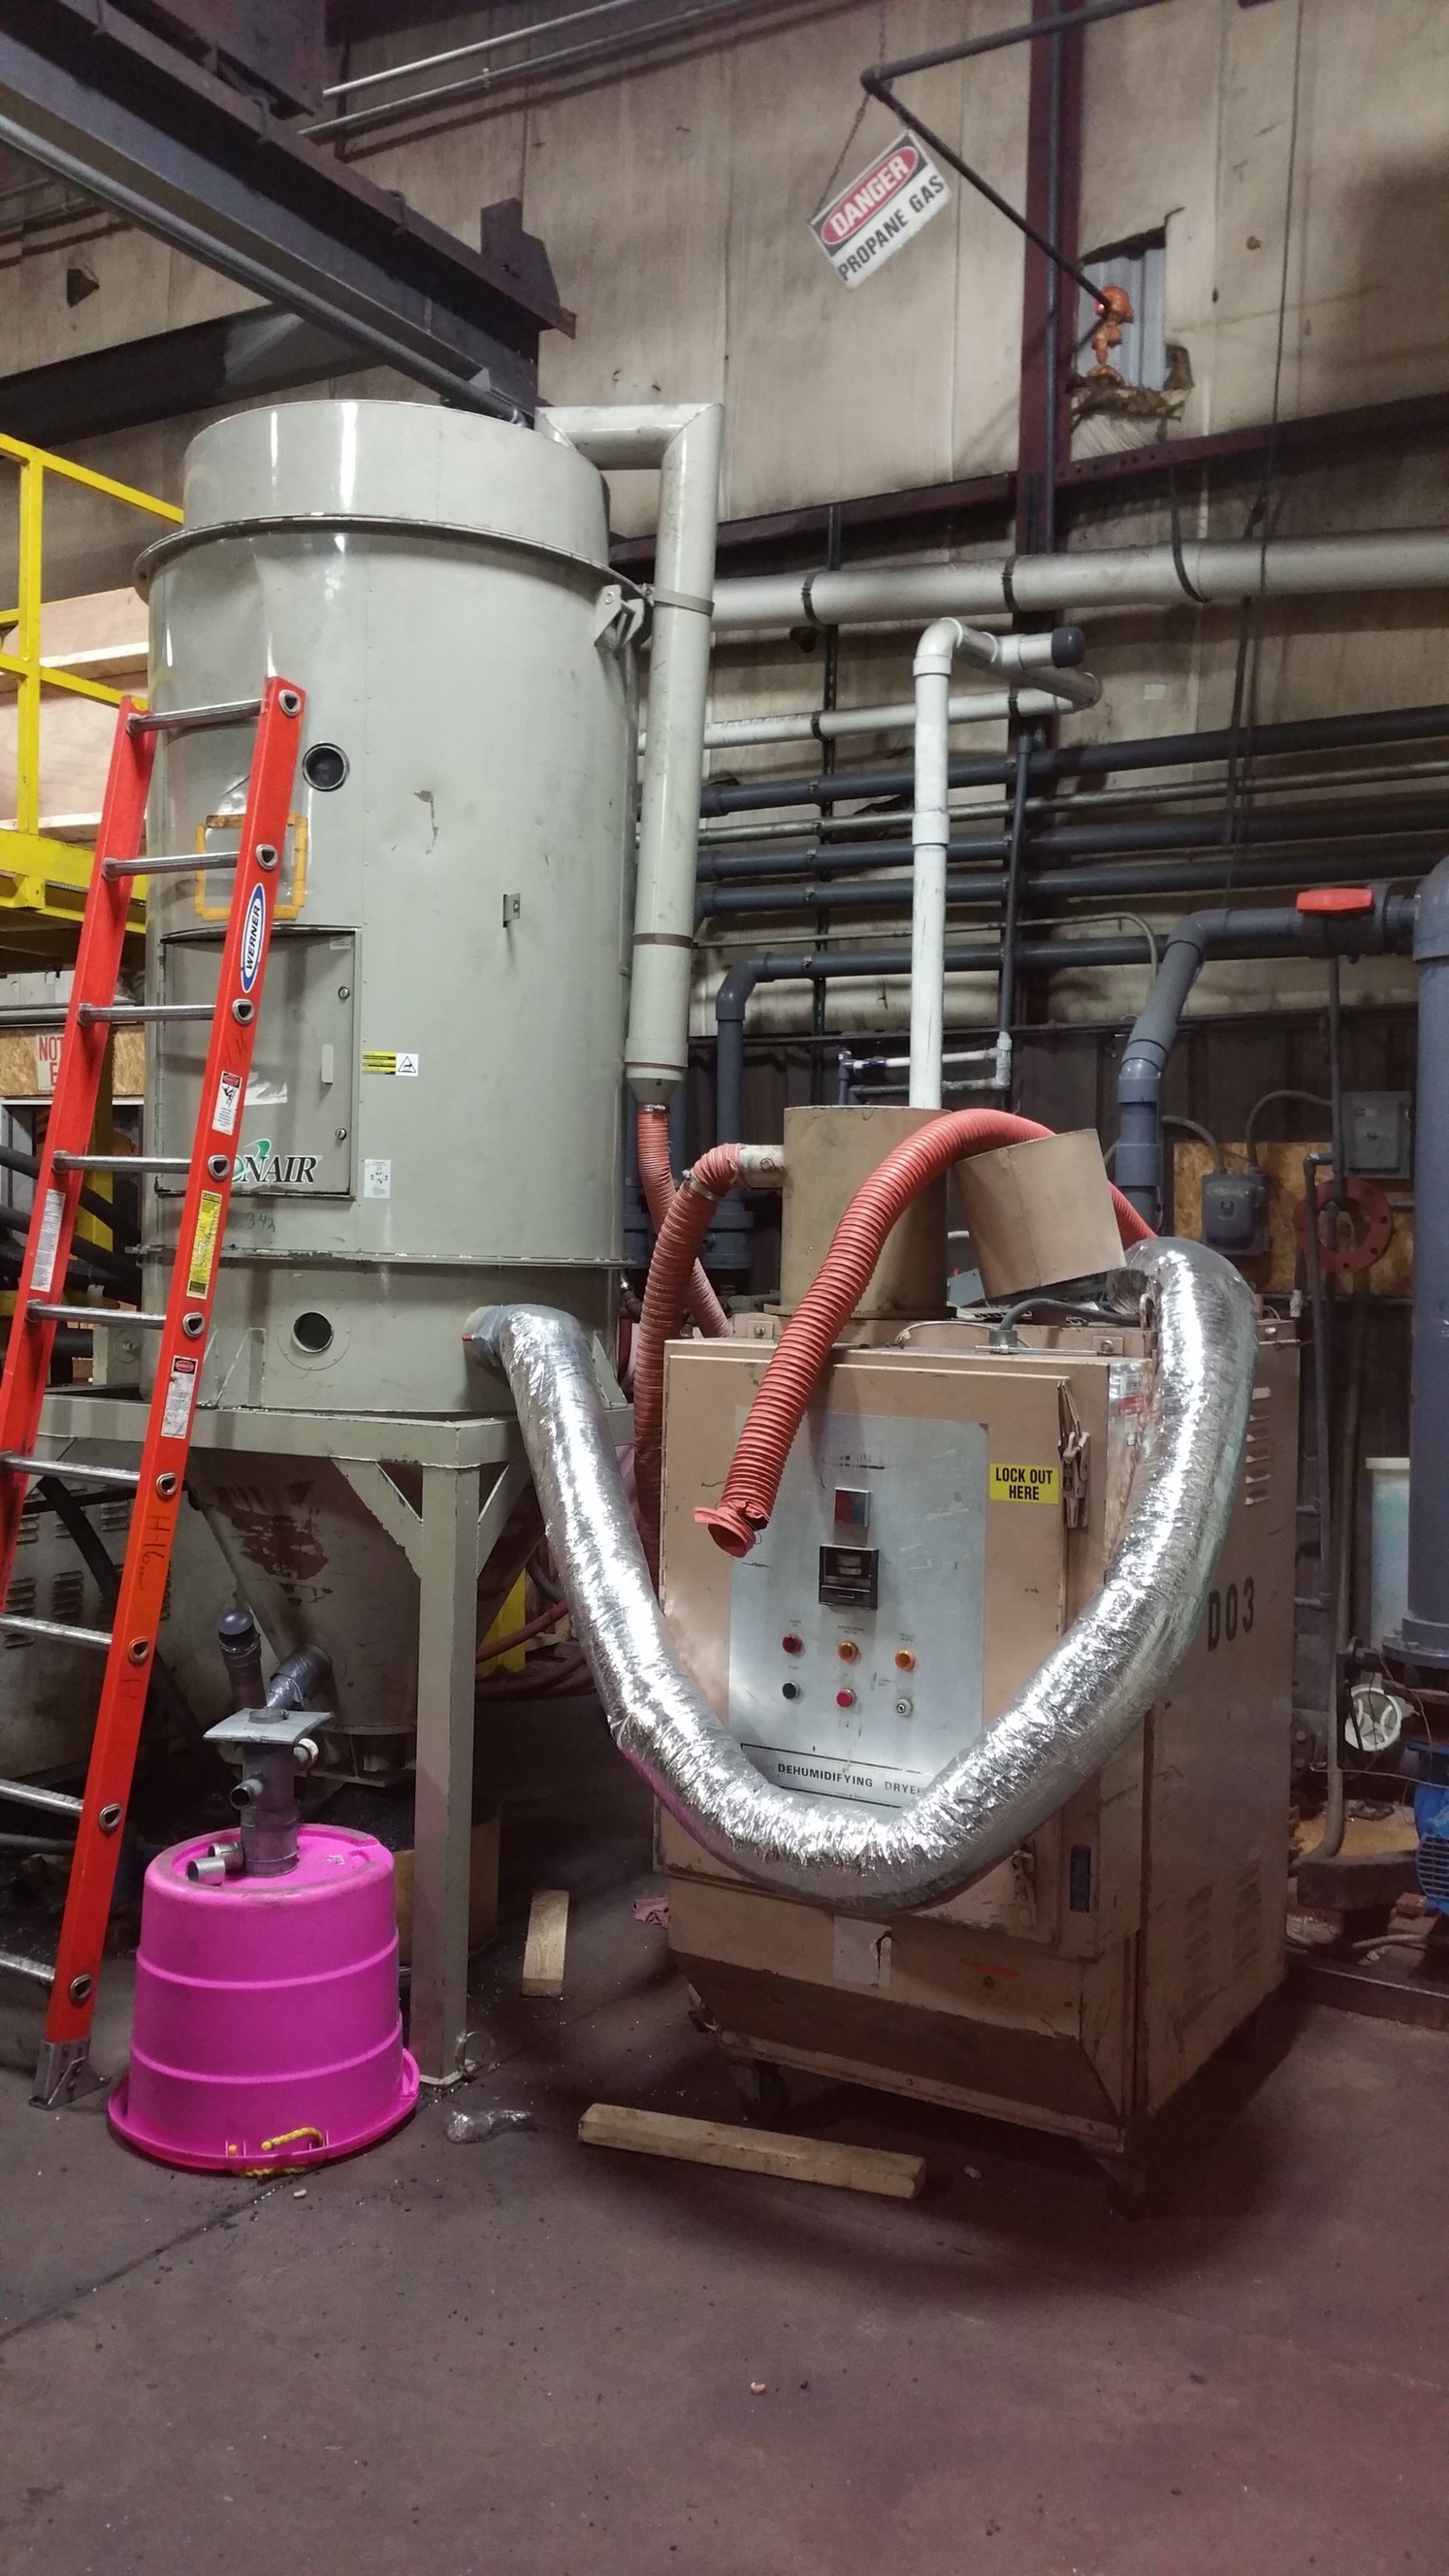 500 Ton Capacity Cincinnati Plastic Injection Molding Machine For Sale